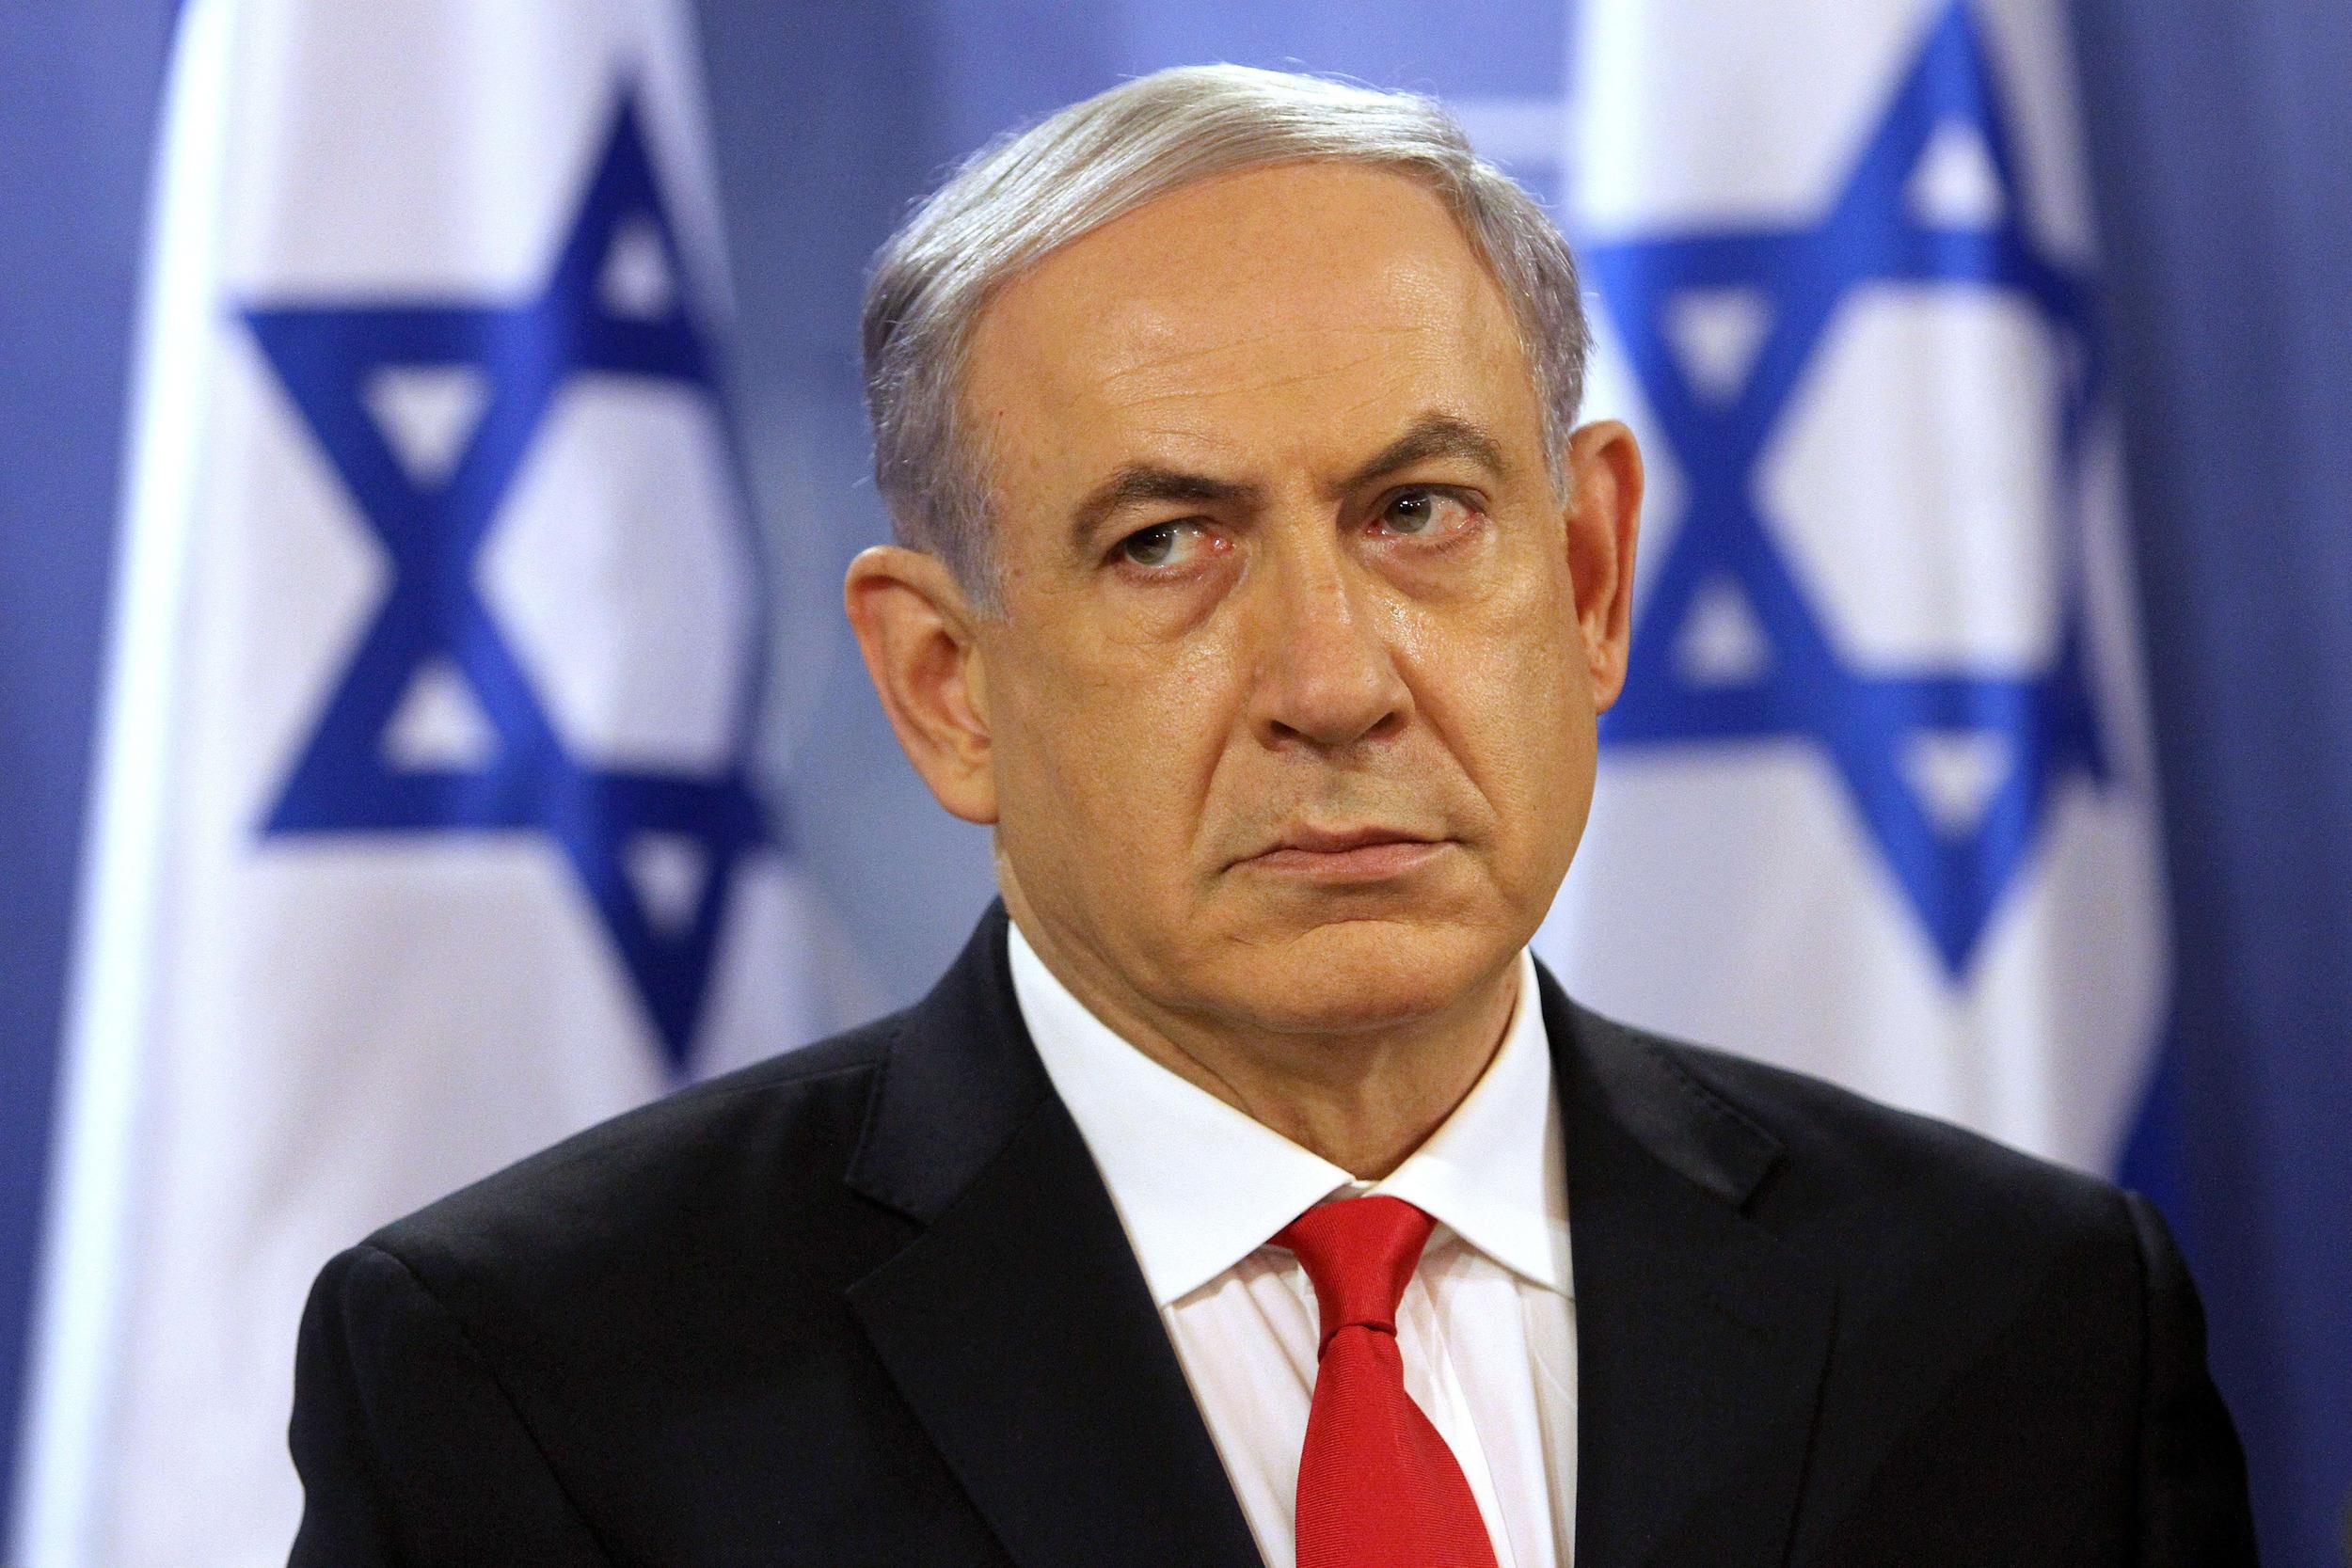 Israeli police question PM Netanyahu in corruption probe